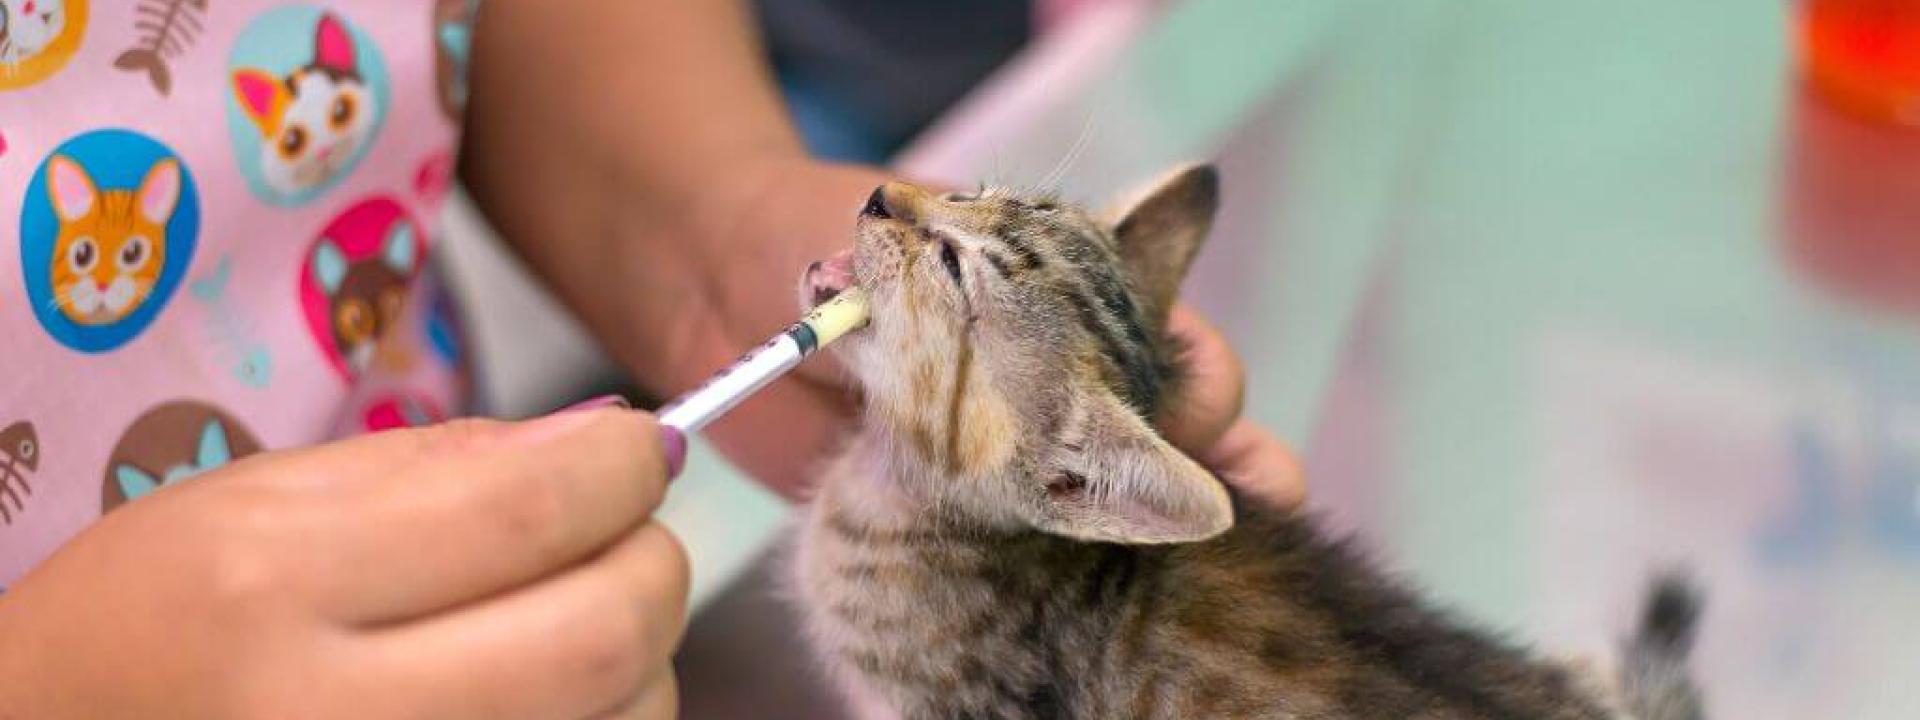 Veterinarian deworming kitten with syringe